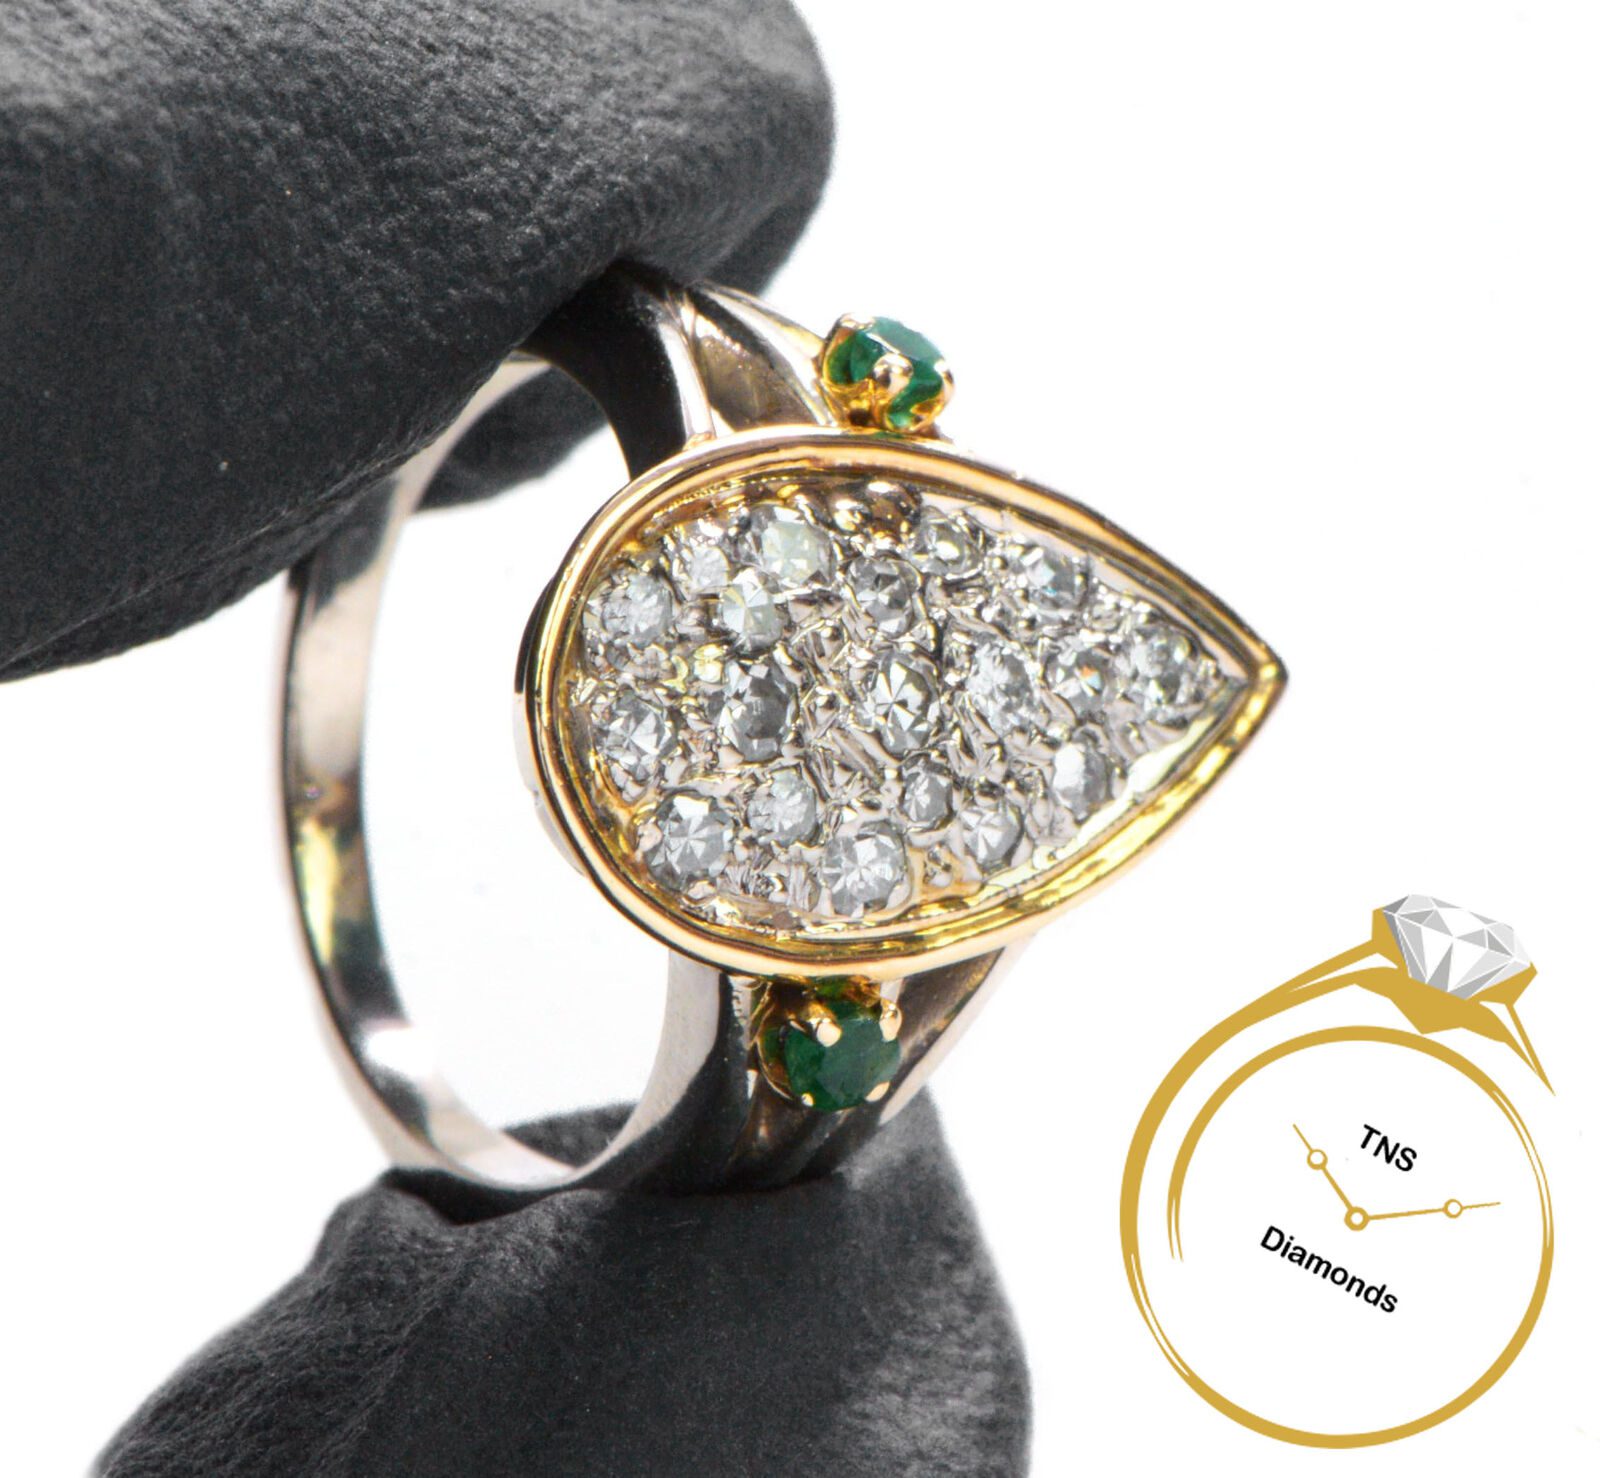 Antique-14k-Yellow-White-Gold-Pear-Diamond-Green-Emerald-Ring-w-Video-173521875995